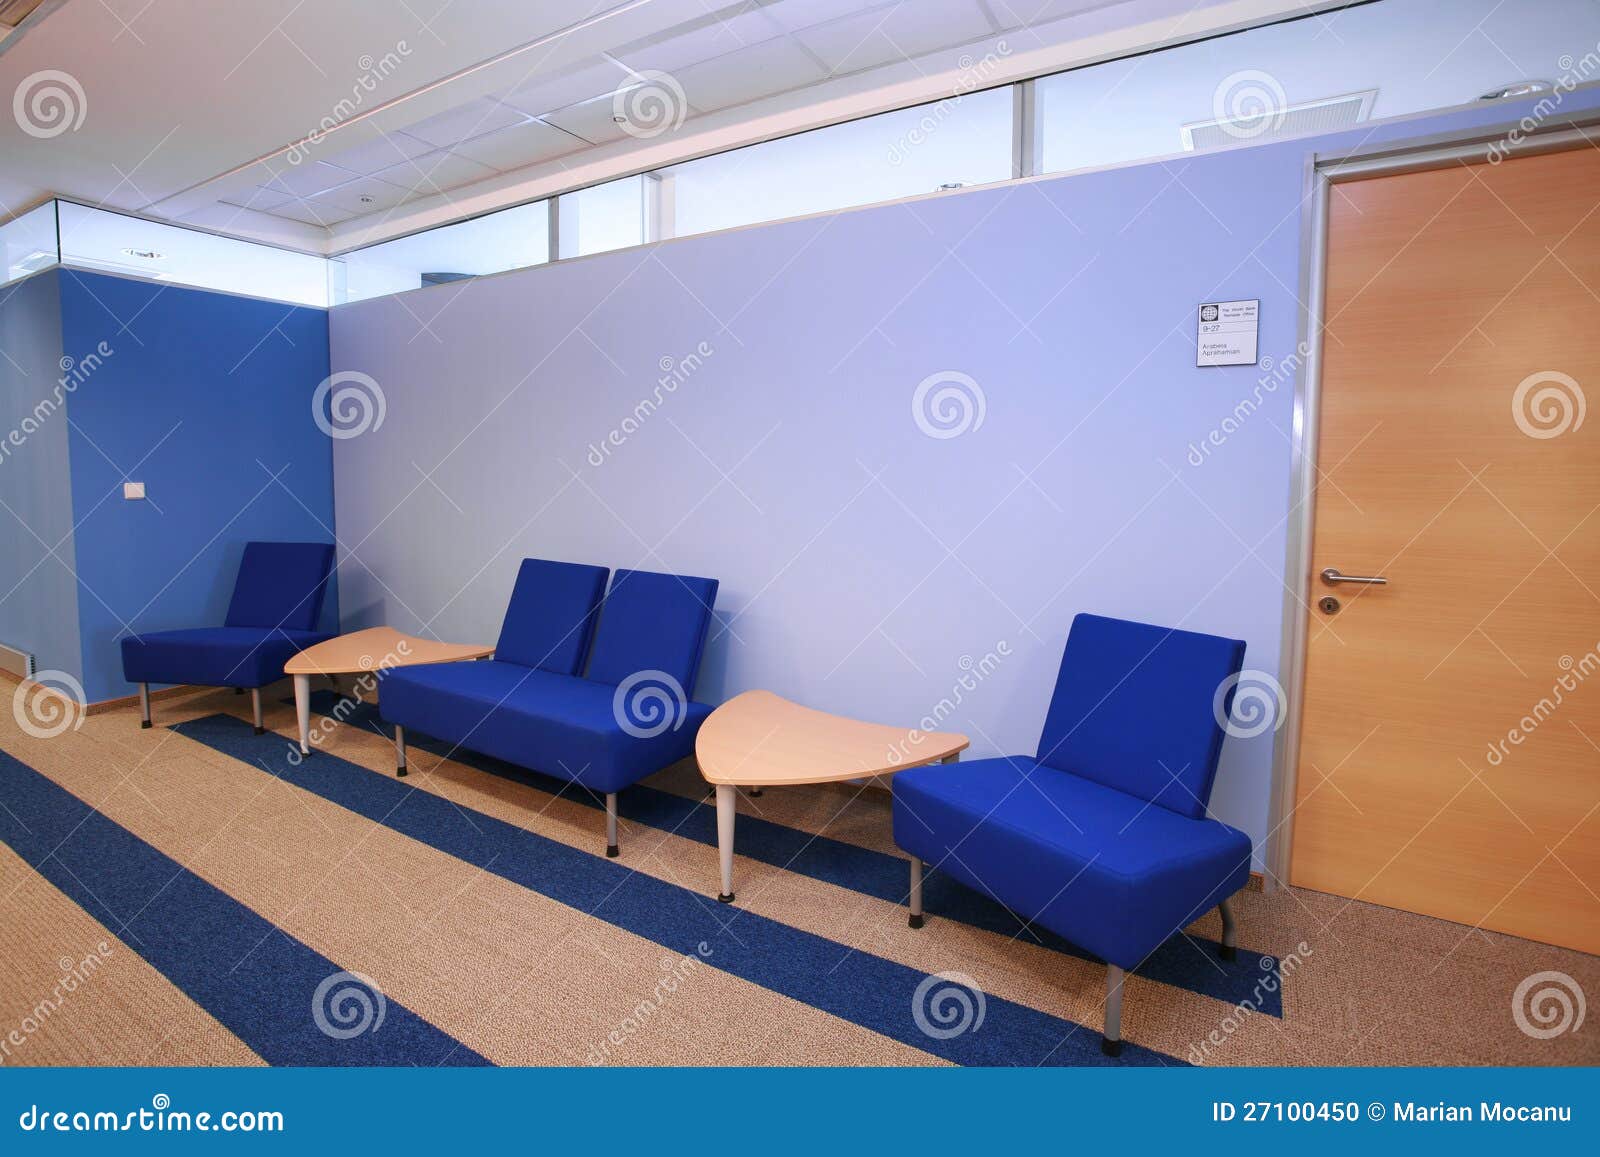 waiting area